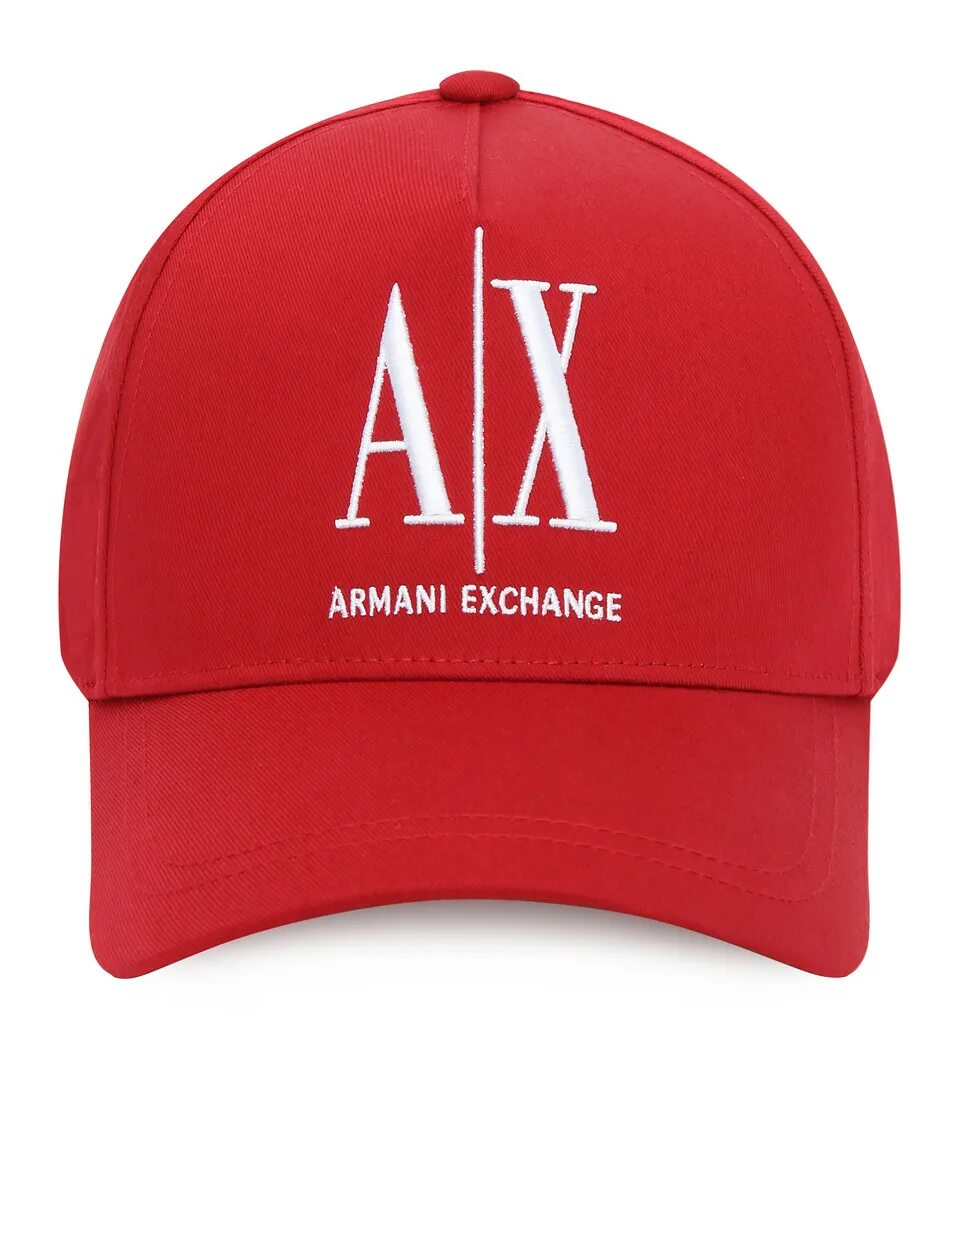 Армани эксчендж интернет магазин. Кепка Armani Exchange 954202. Кепка Armani Exchange белая. Бейсболки Армани эксчендж новая коллекция.